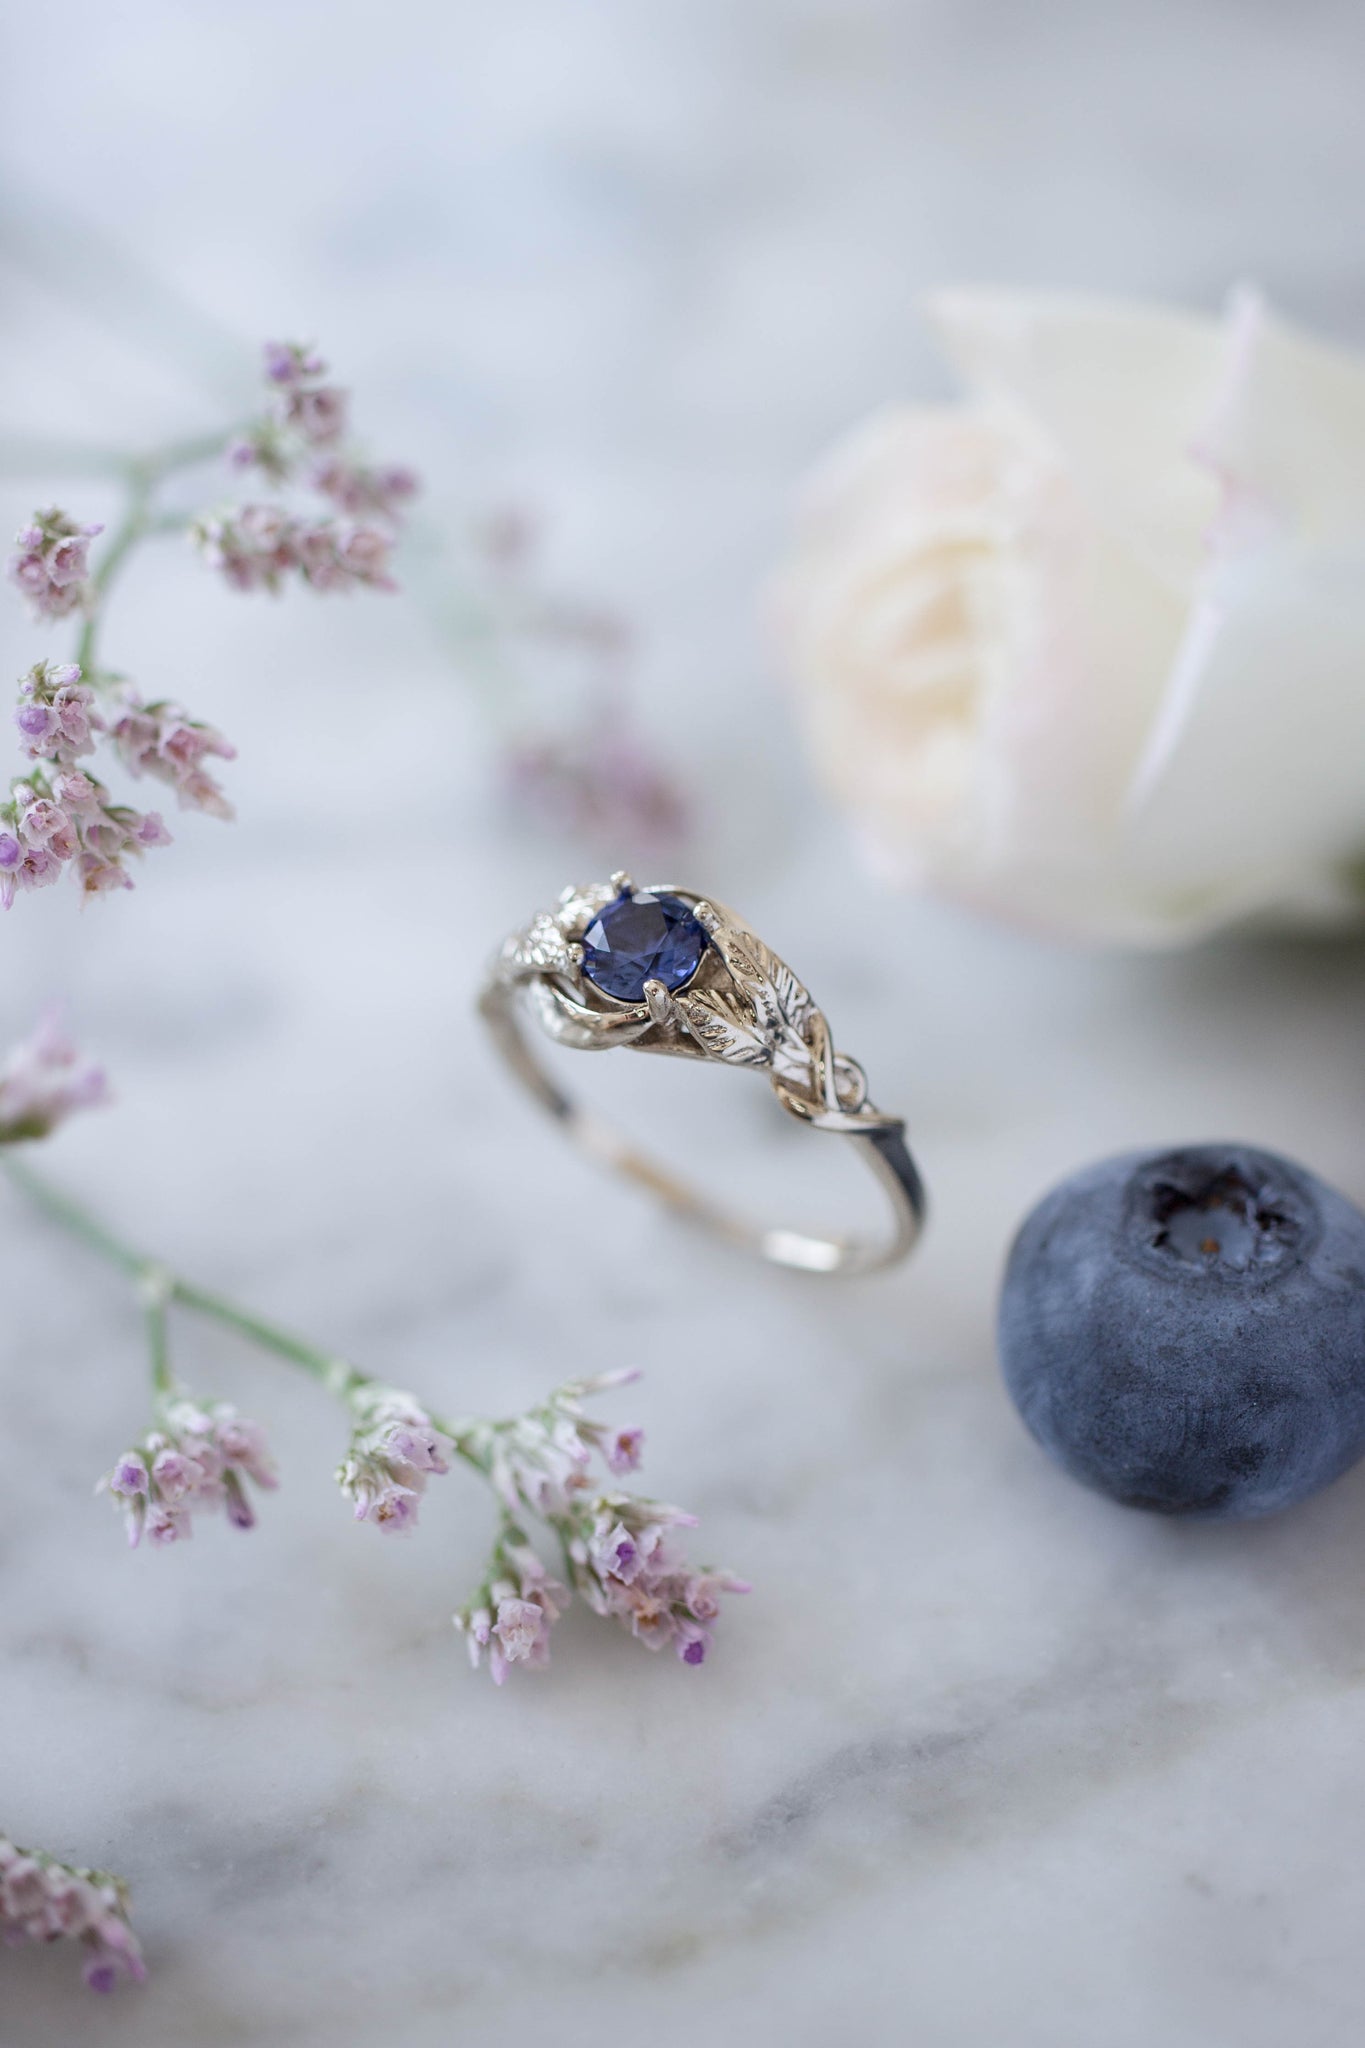 Lab created sapphire engagement ring / Azalea - Eden Garden Jewelry™